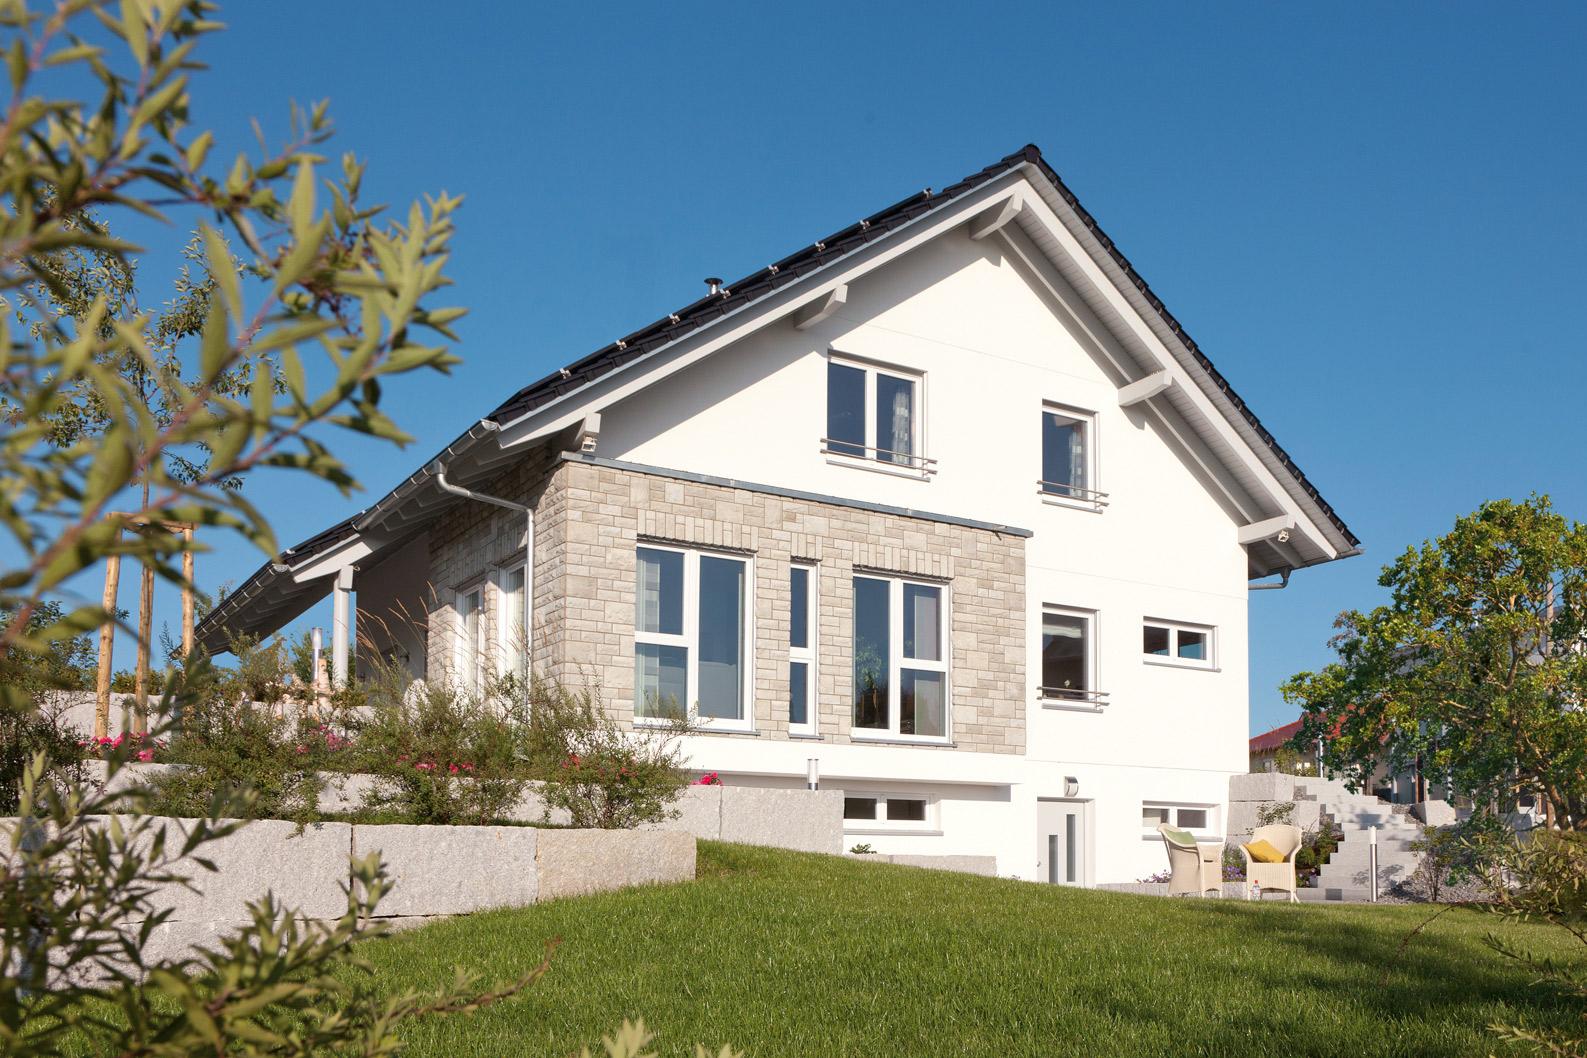 Plus Energy House from SchwörerHaus